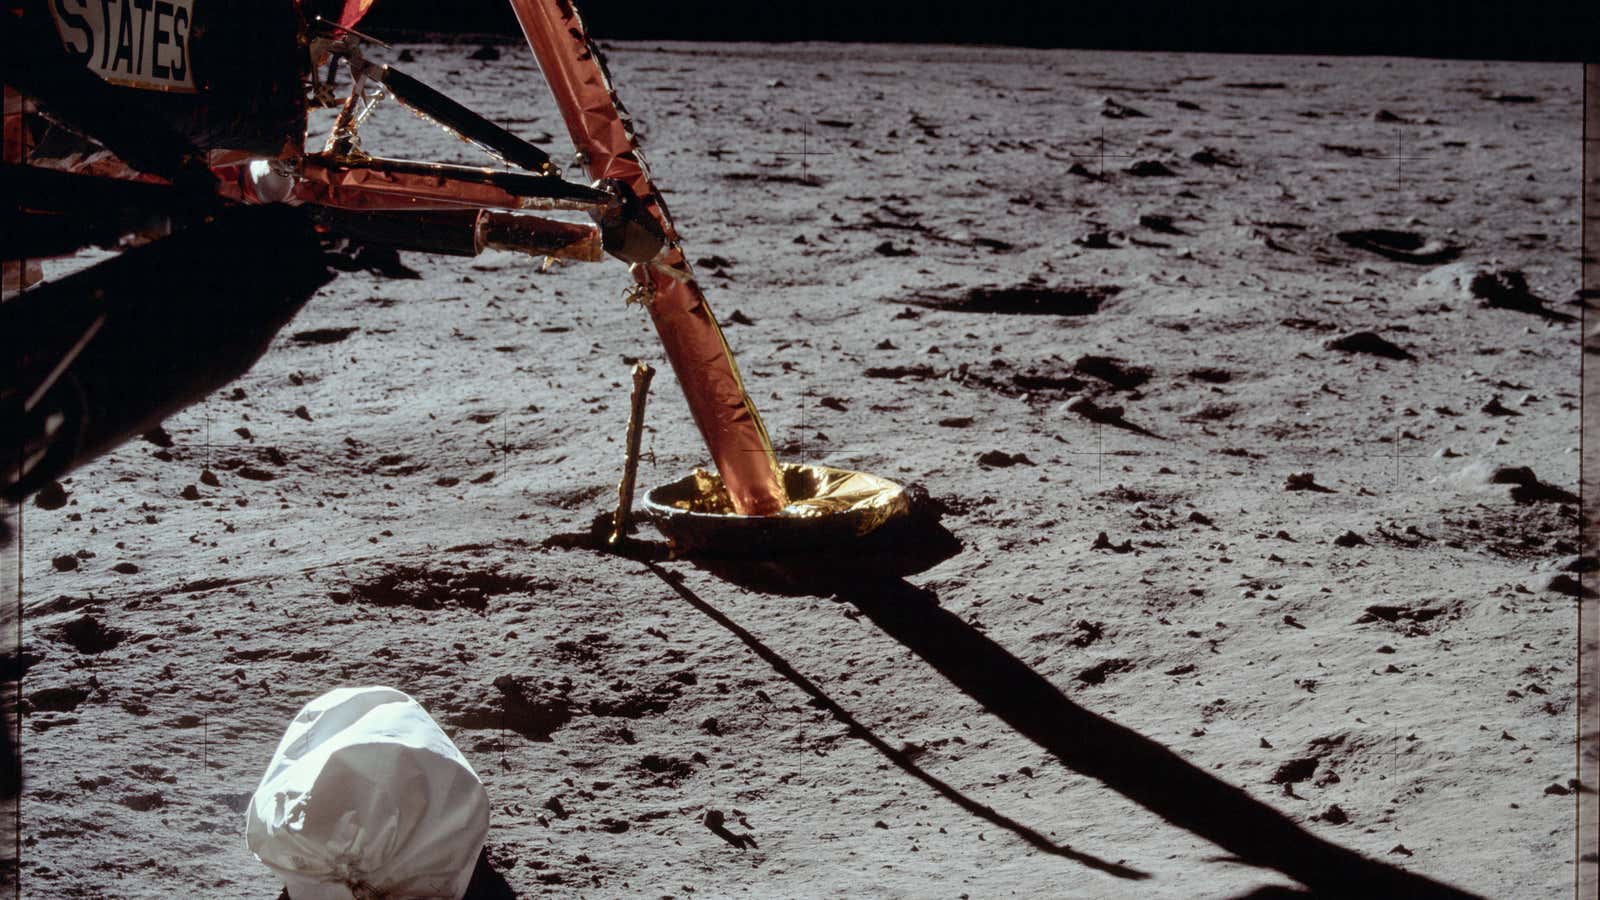 One leg of the lunar module.